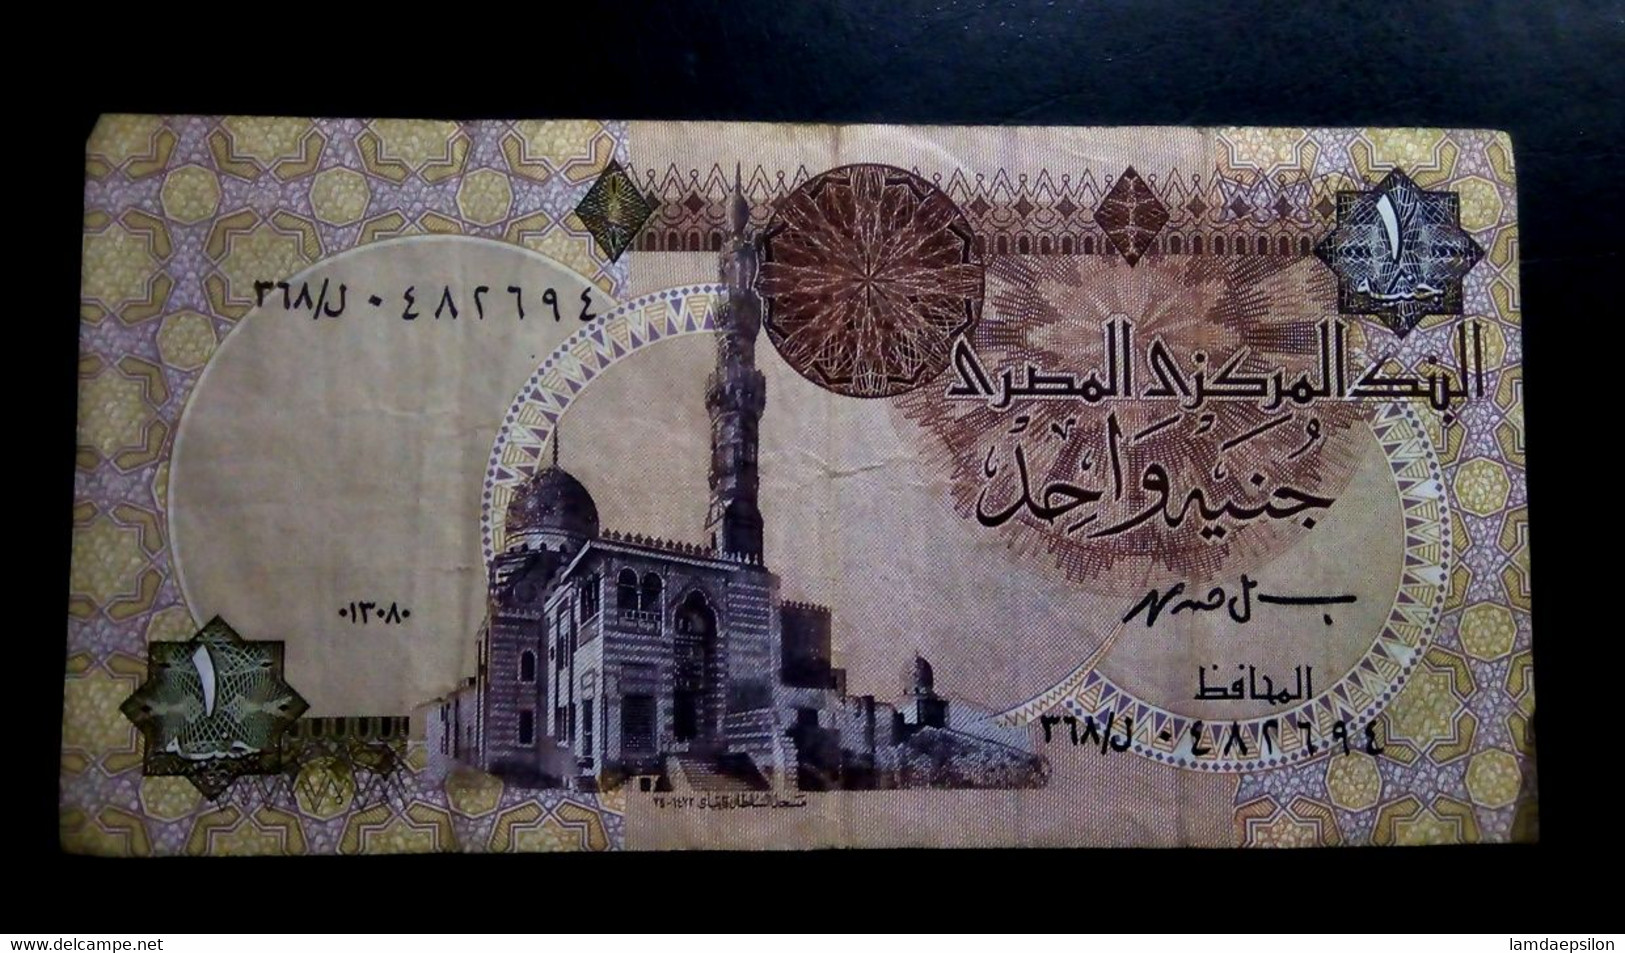 A6  EGYPTE   BILLETS DU MONDE EGYPT  BANKNOTES  1 POUND 1996 - Egitto